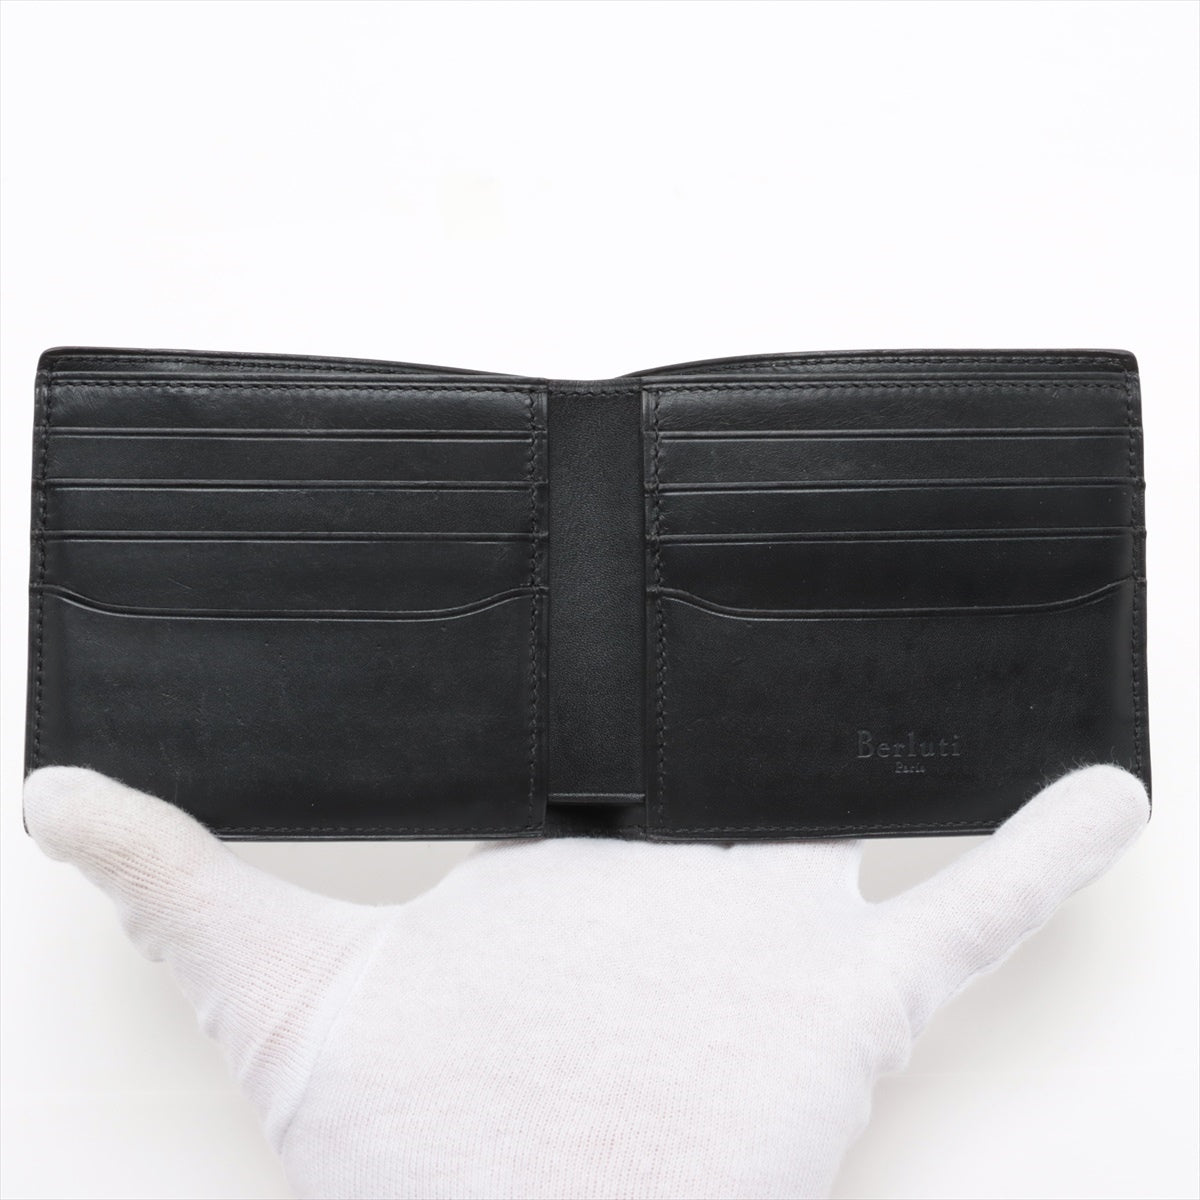 Berluti Leather Compact Wallet Navy blue La Pière Serplise Wallet